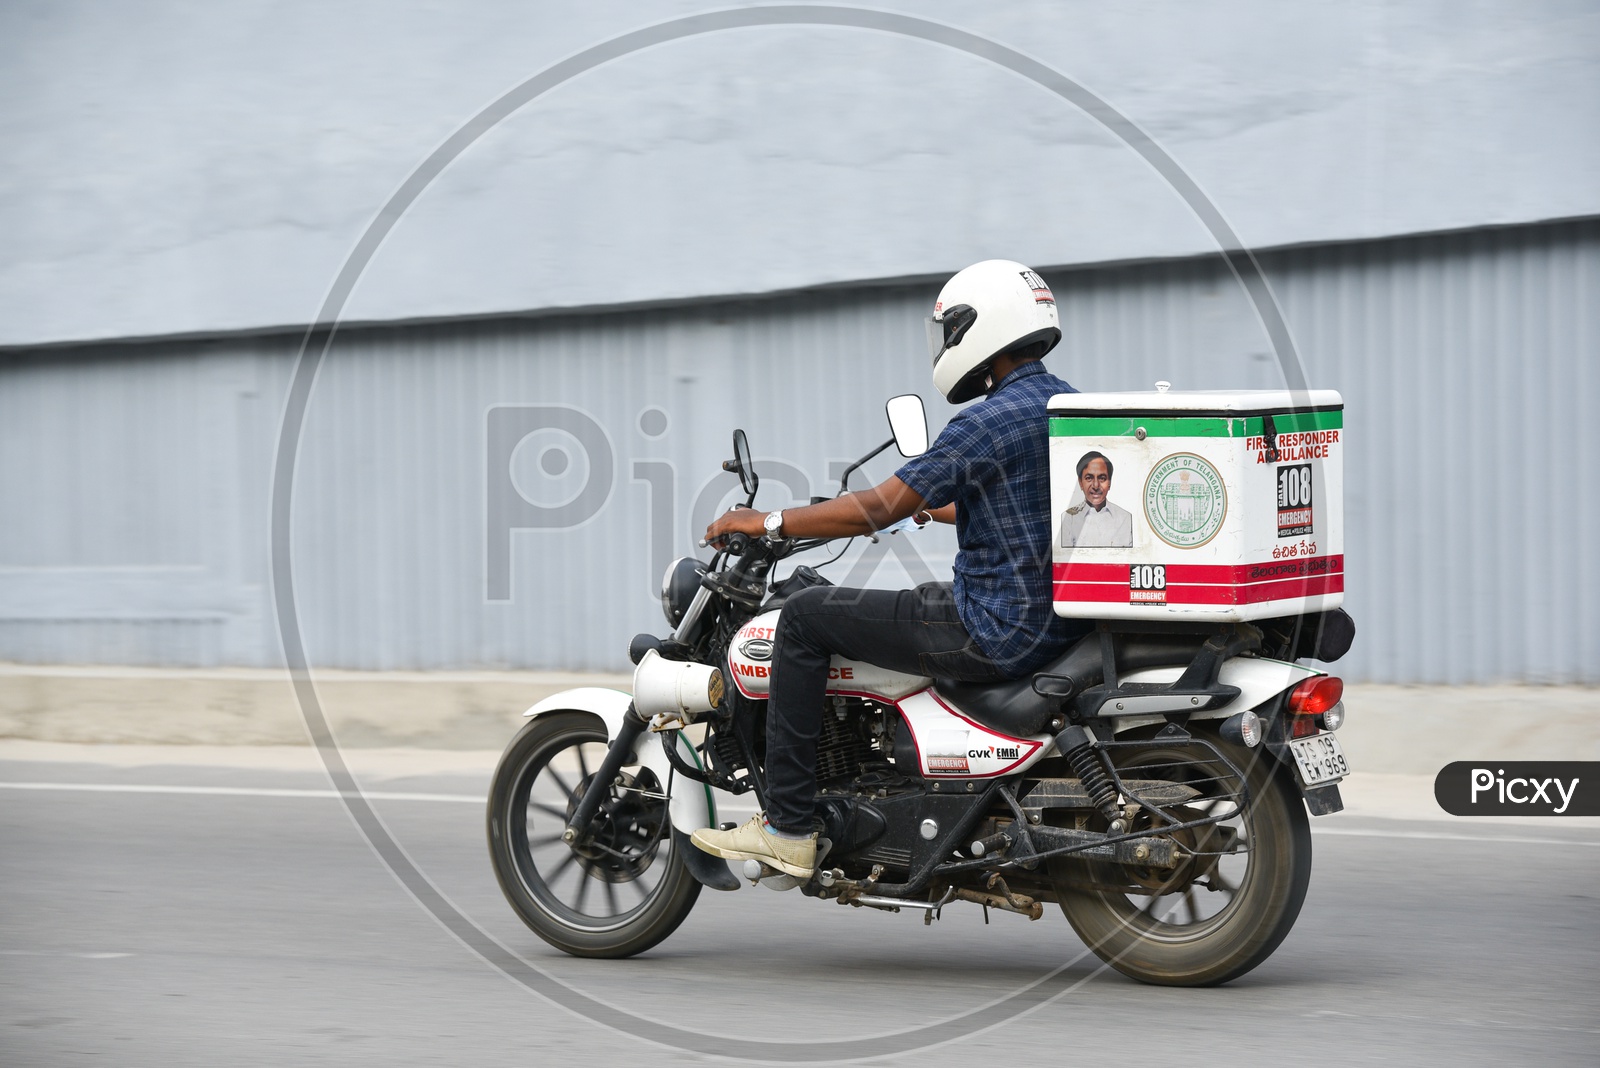 First Responder Ambulance  Or Bike Ambulance 108 by Telangana State Government